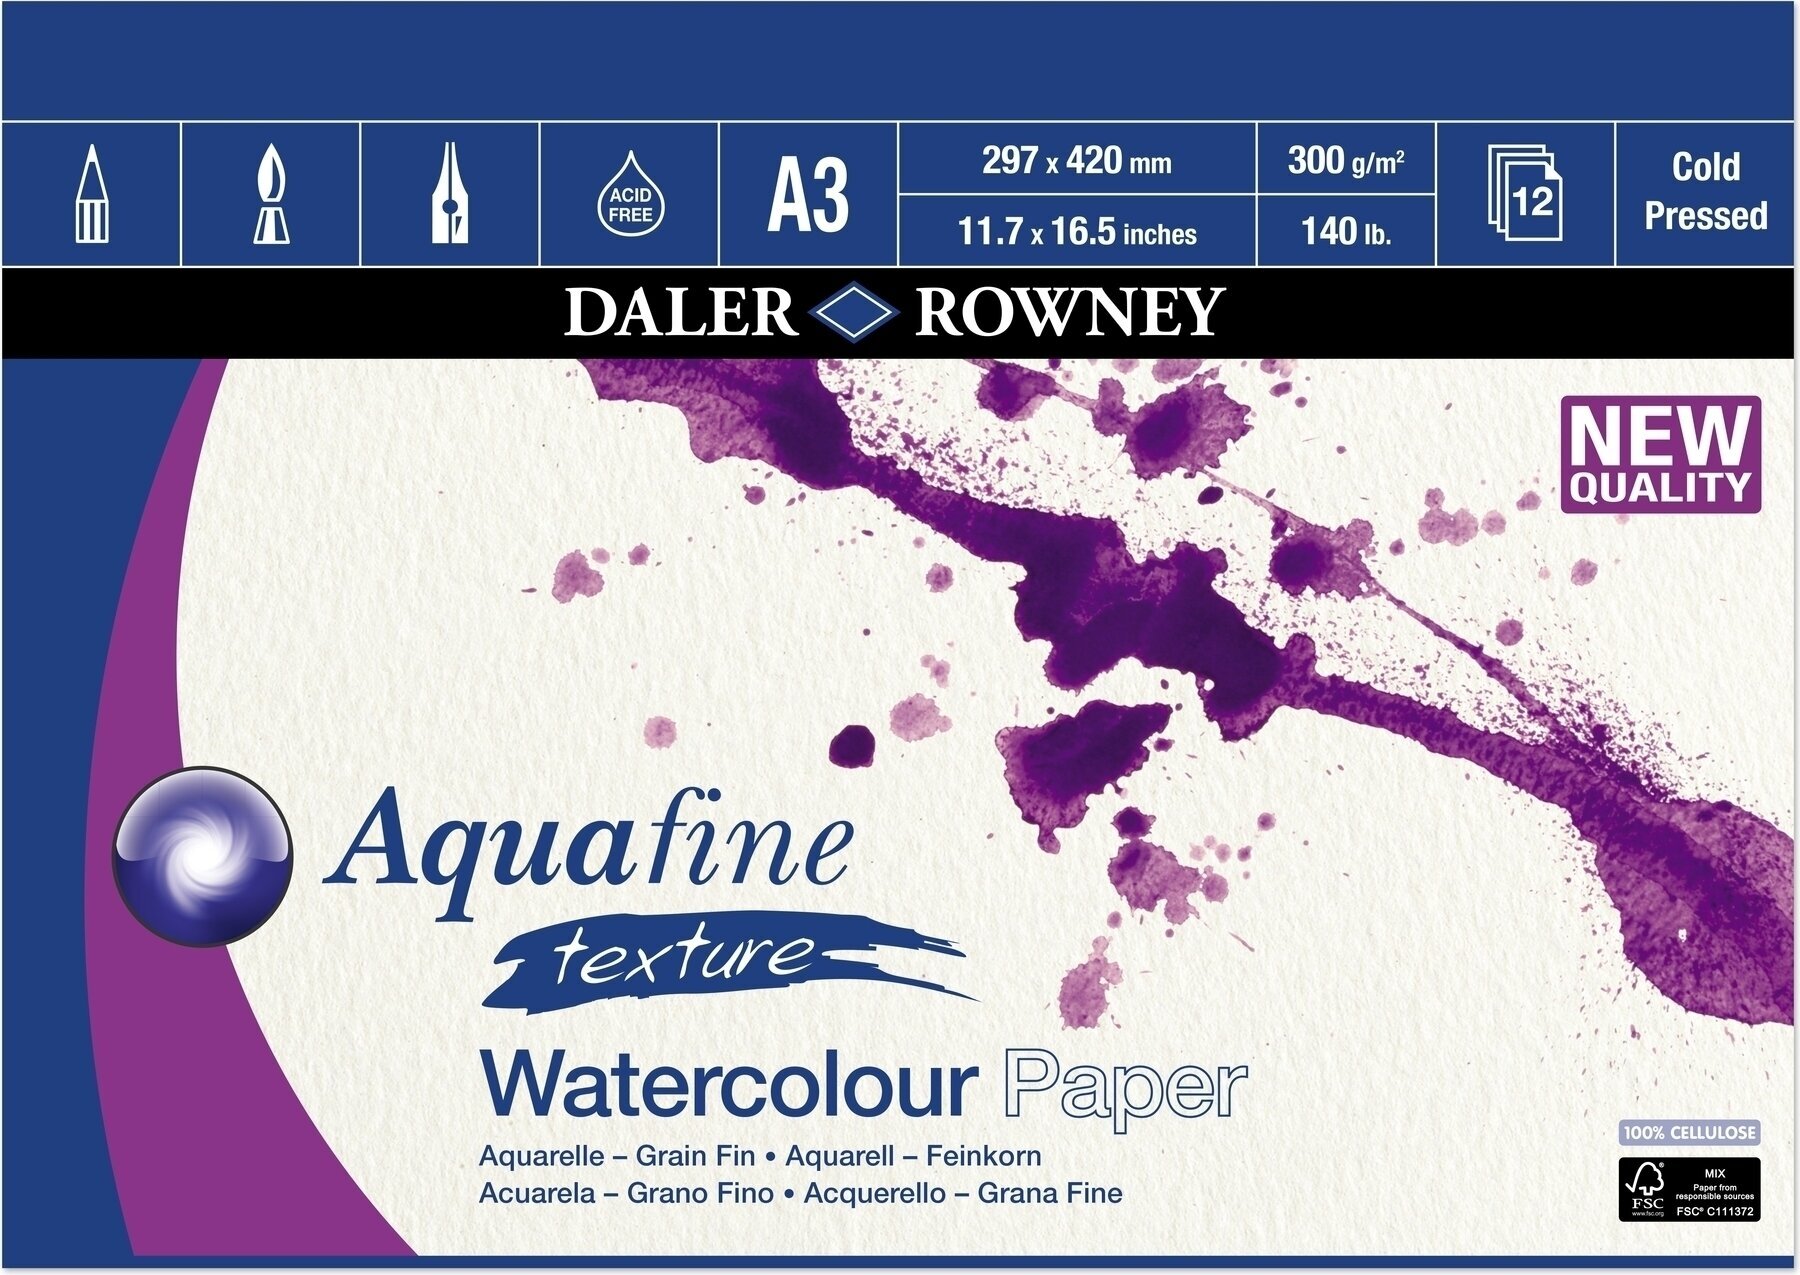 Szkicownik Daler Rowney Aquafine Texture Watercolour Paper Aquafine A3 300 g Szkicownik